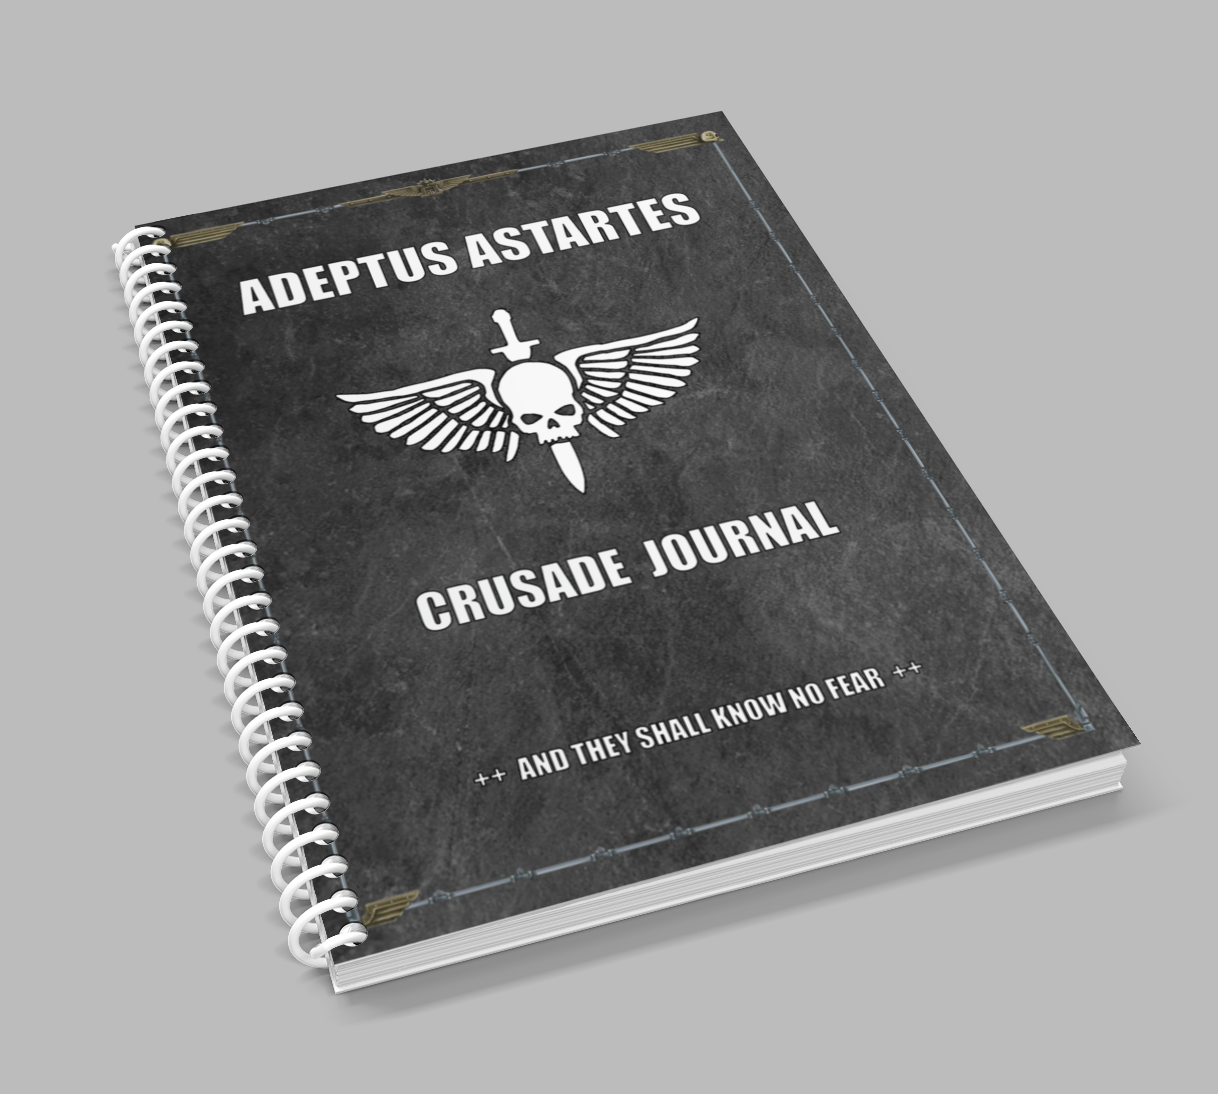 Adeptus Astartes | Crusade Journal | 40k